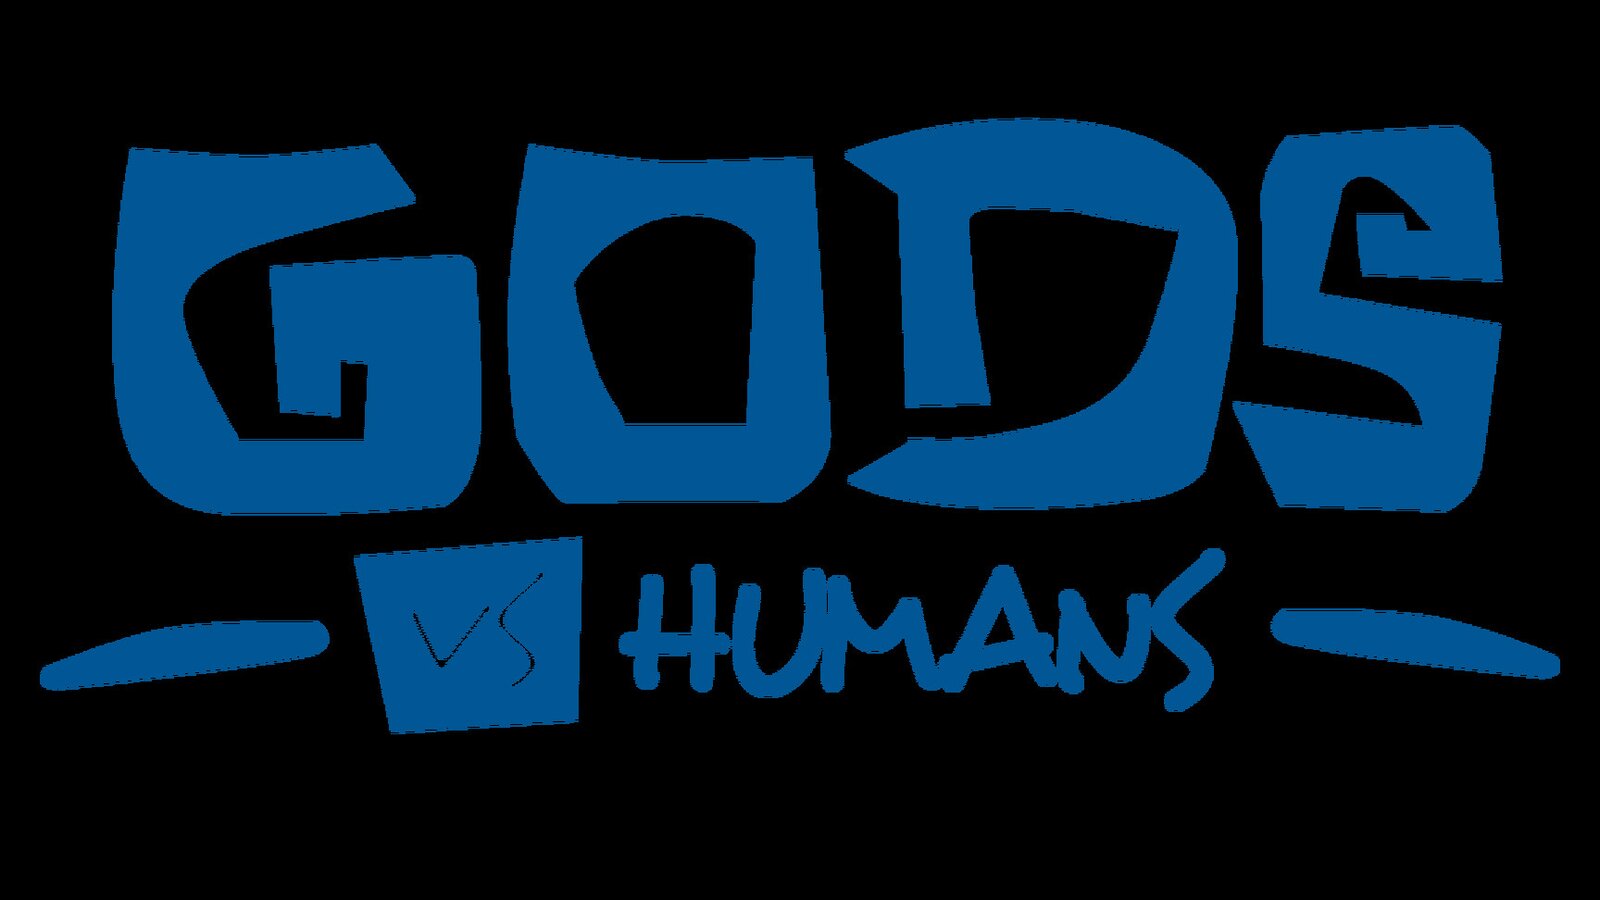 Gods vs Humans